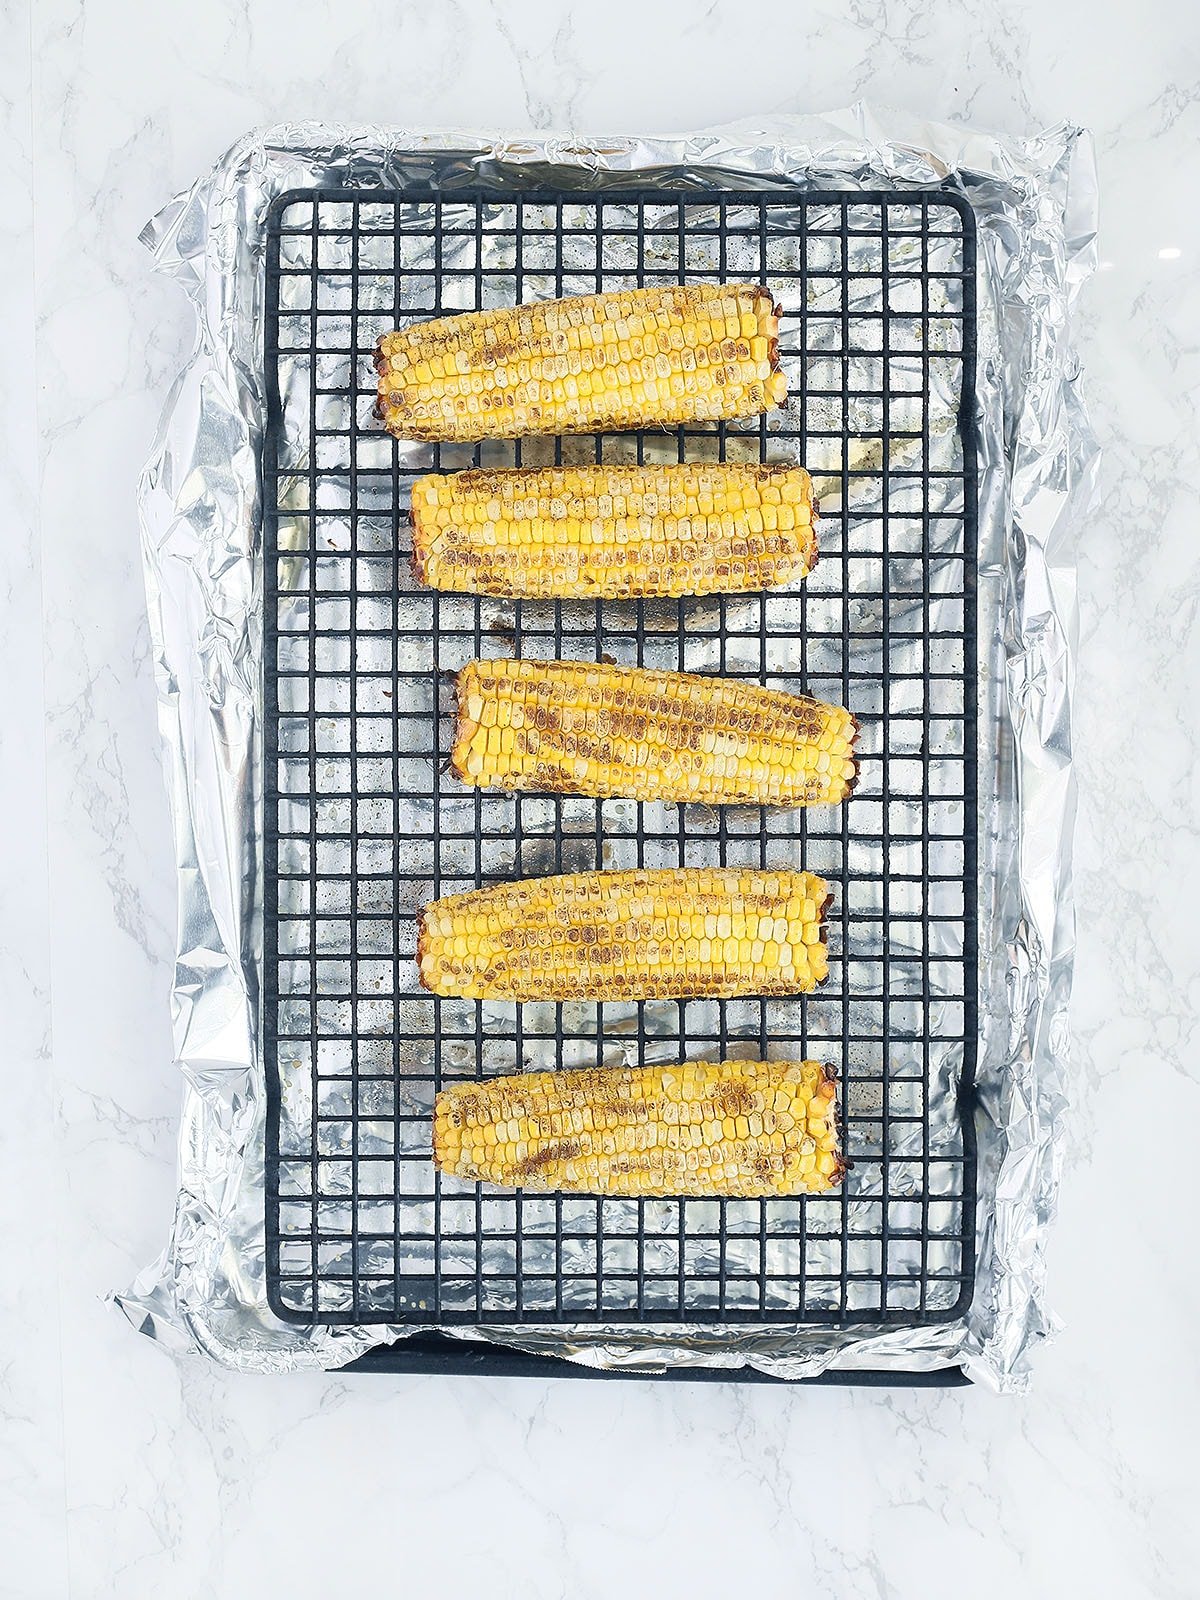 five ears of roasted corn on a baking rack